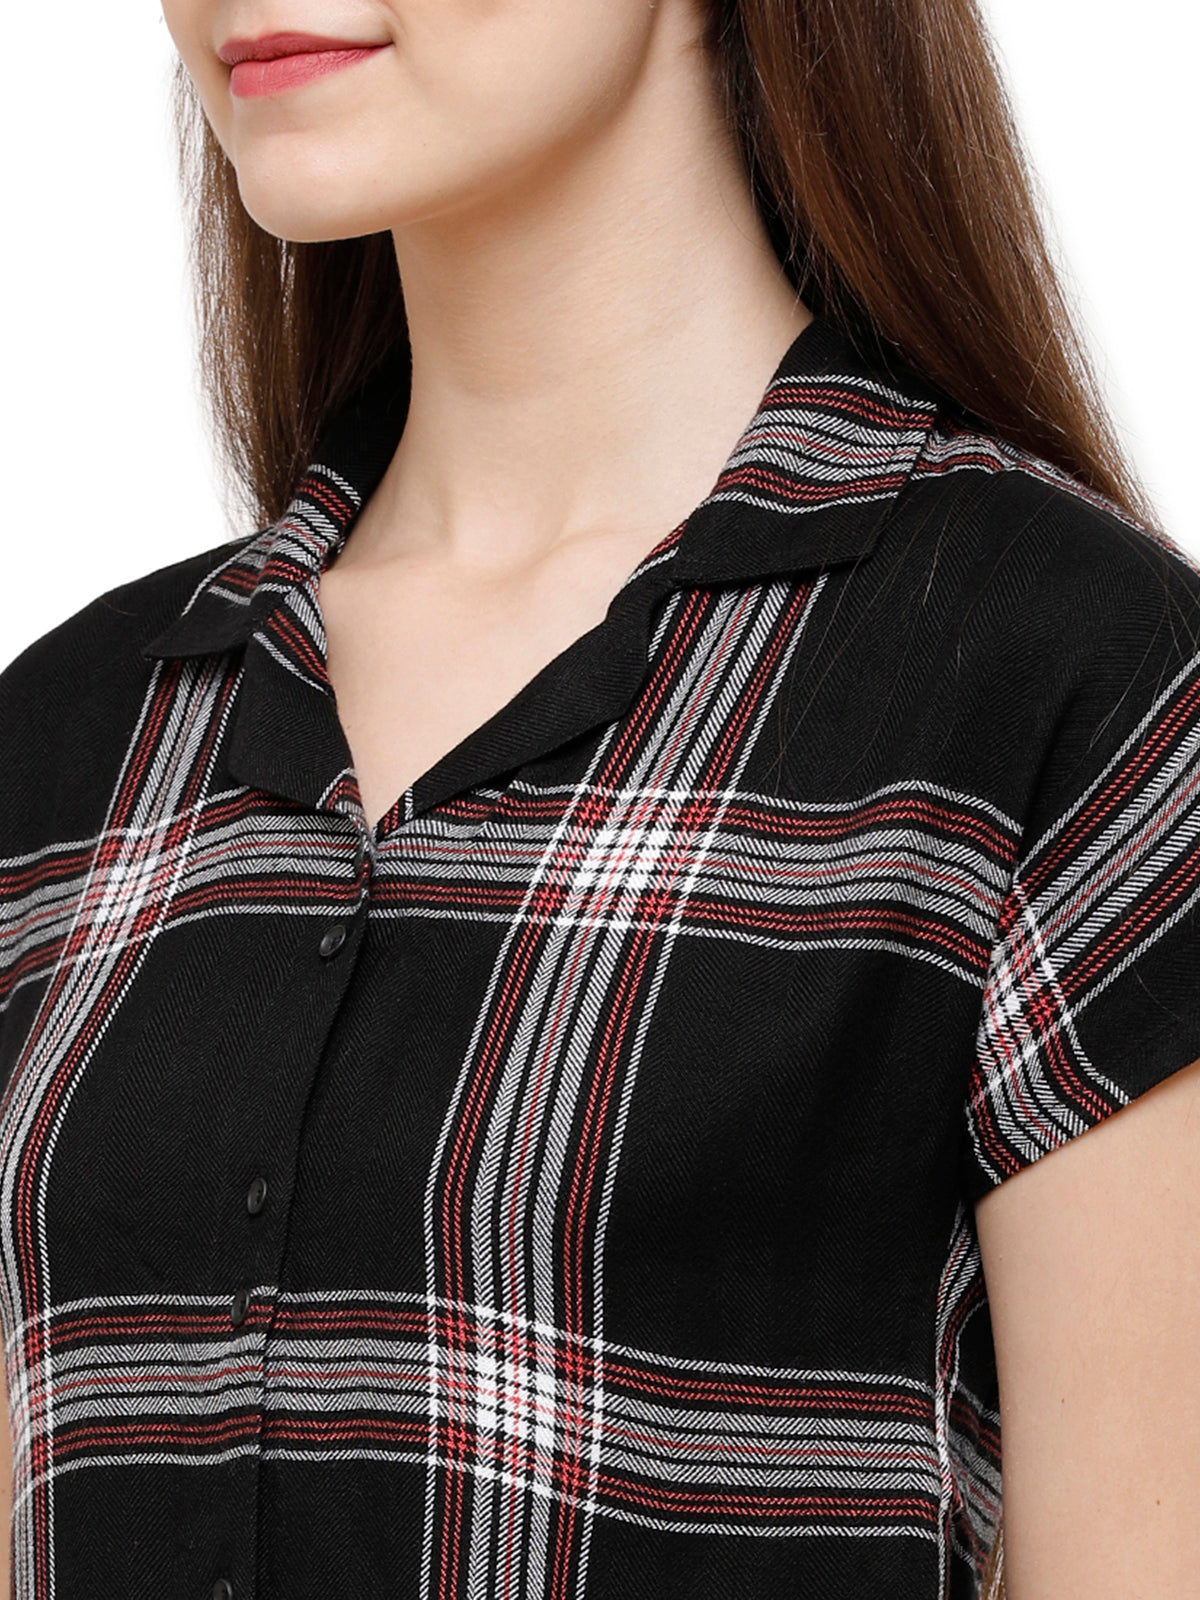 Identiti Women Checkered Slim Fit Casual Shirt